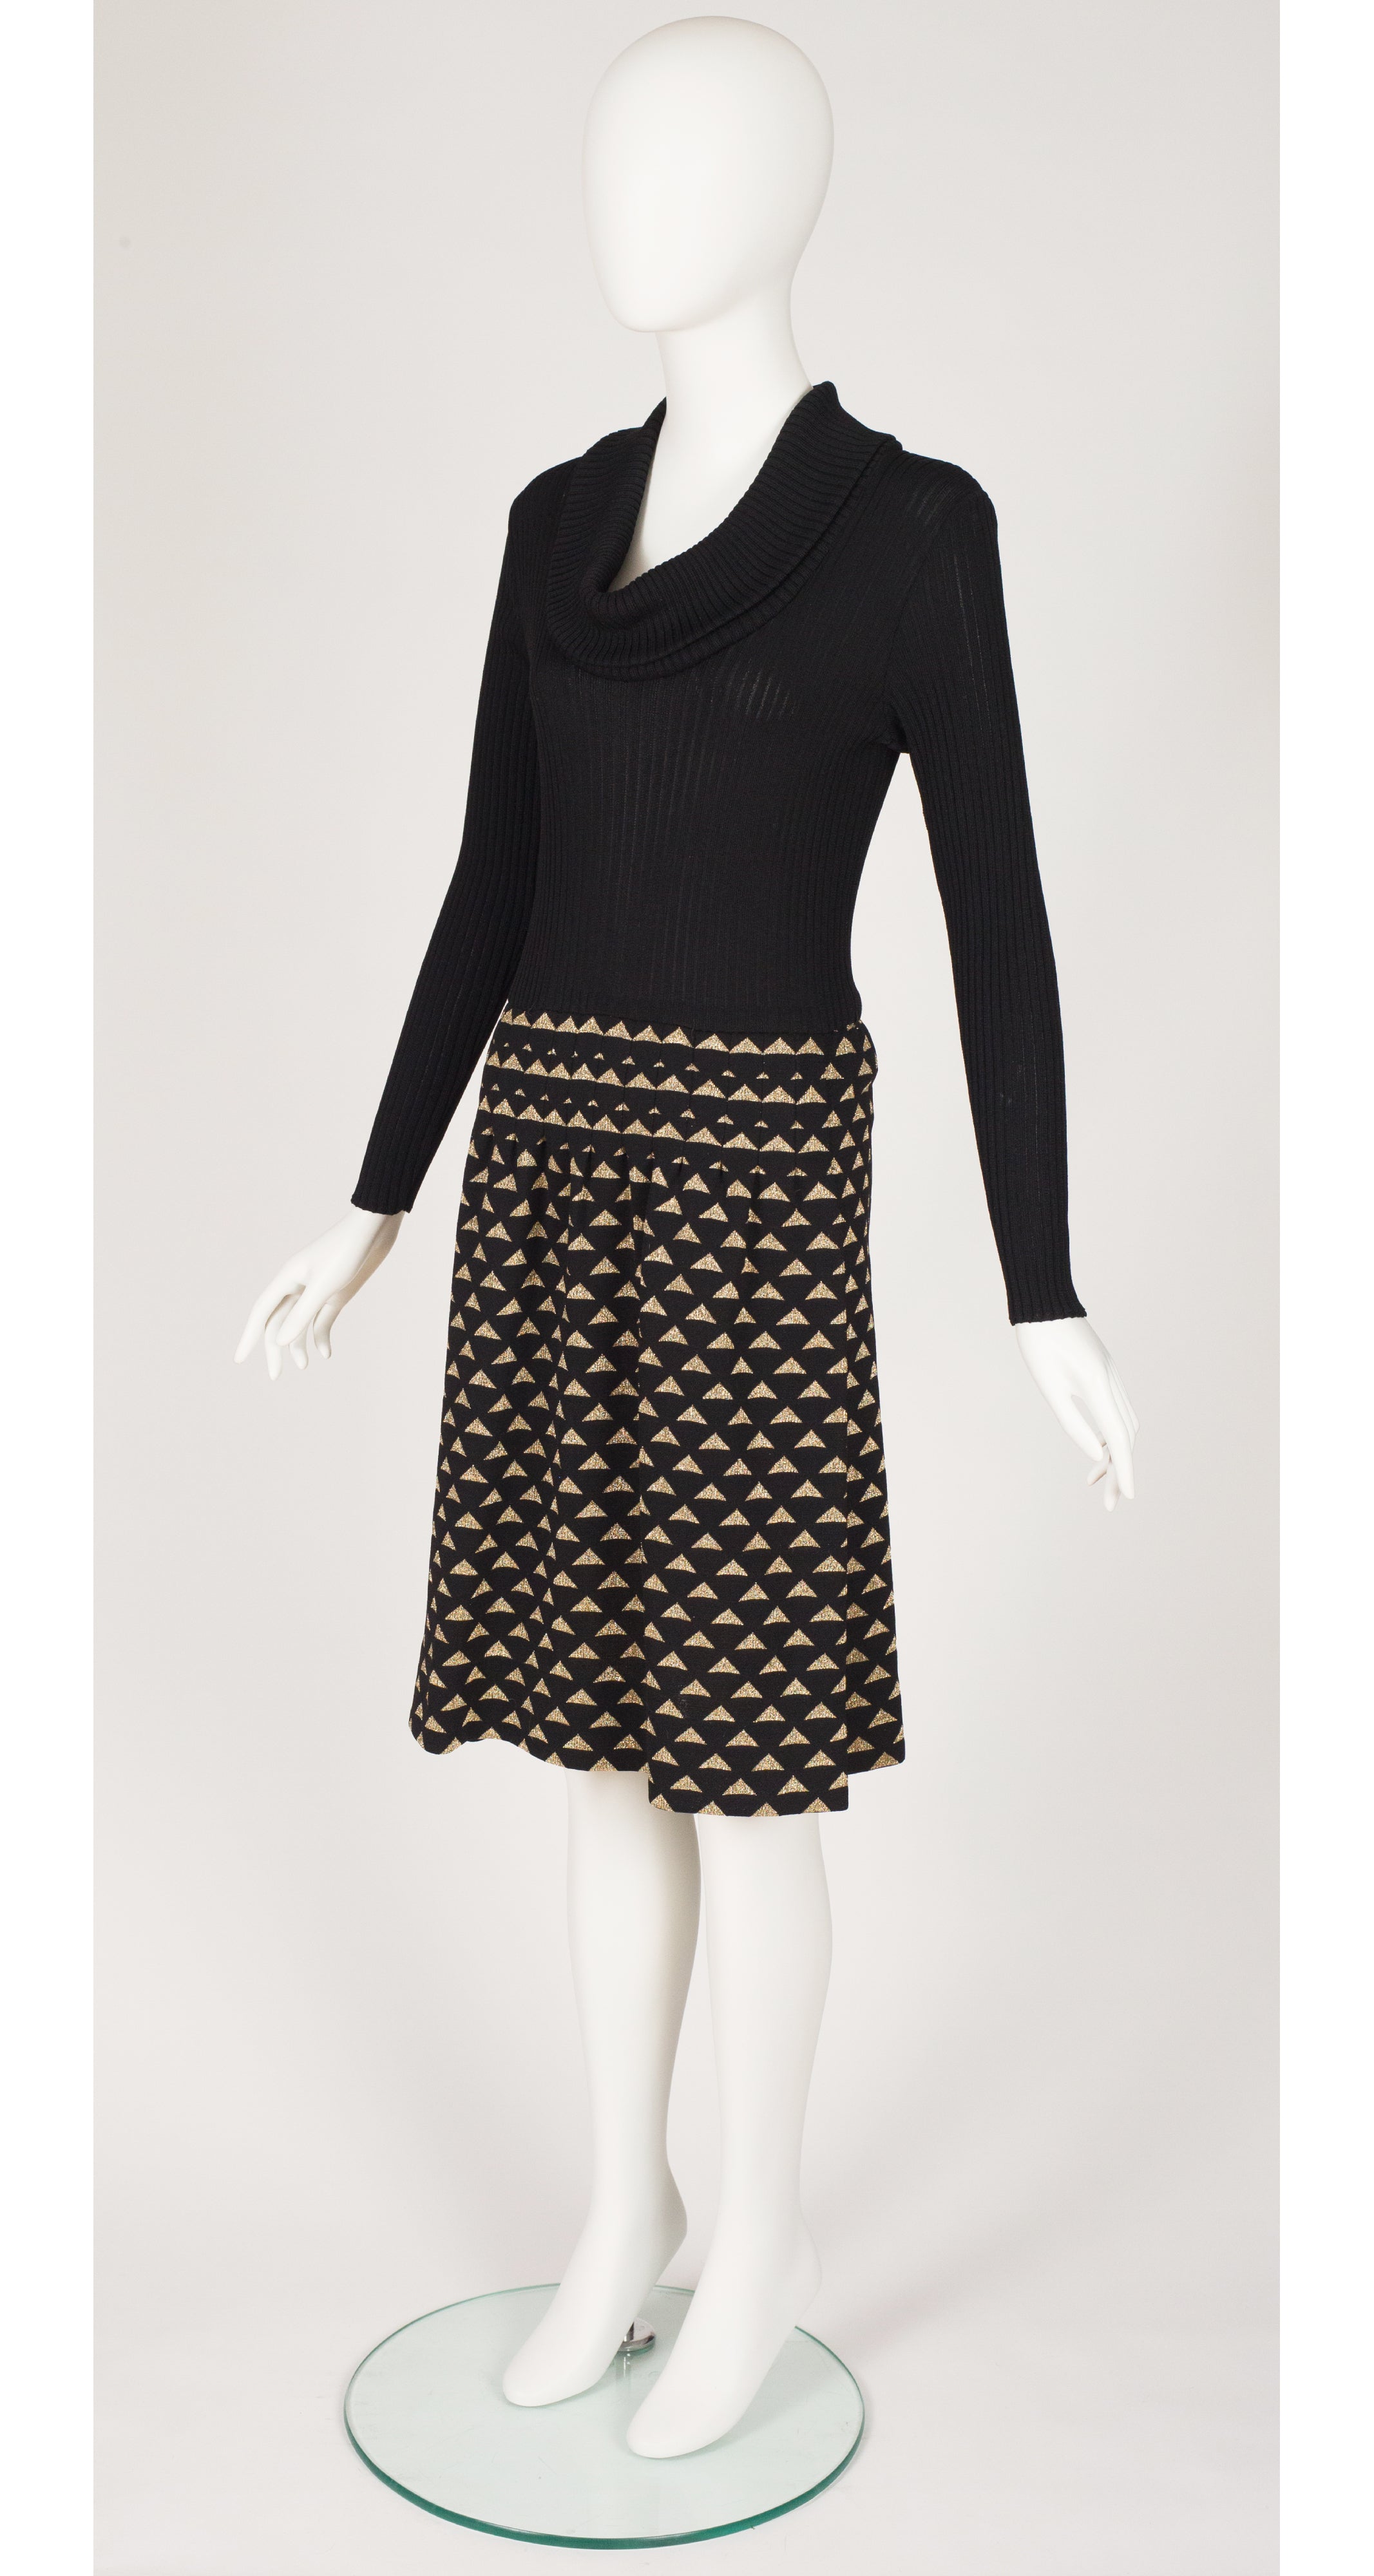 1970s Gold Lurex Black Knit Cowl Neck Dress